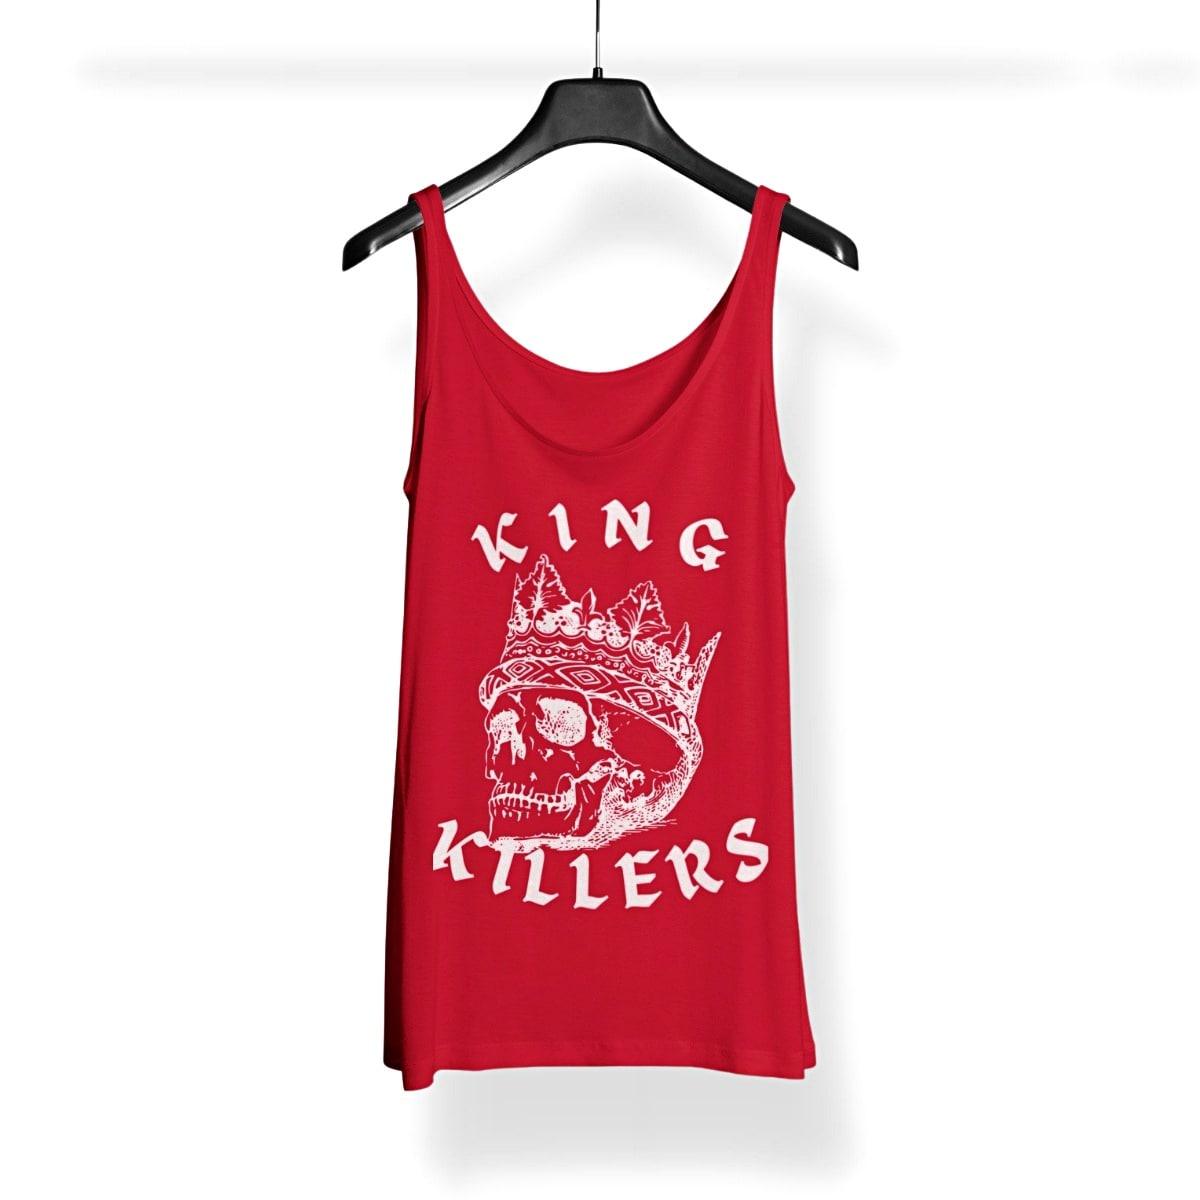 King Killers Skull Tank Top - Shop Online